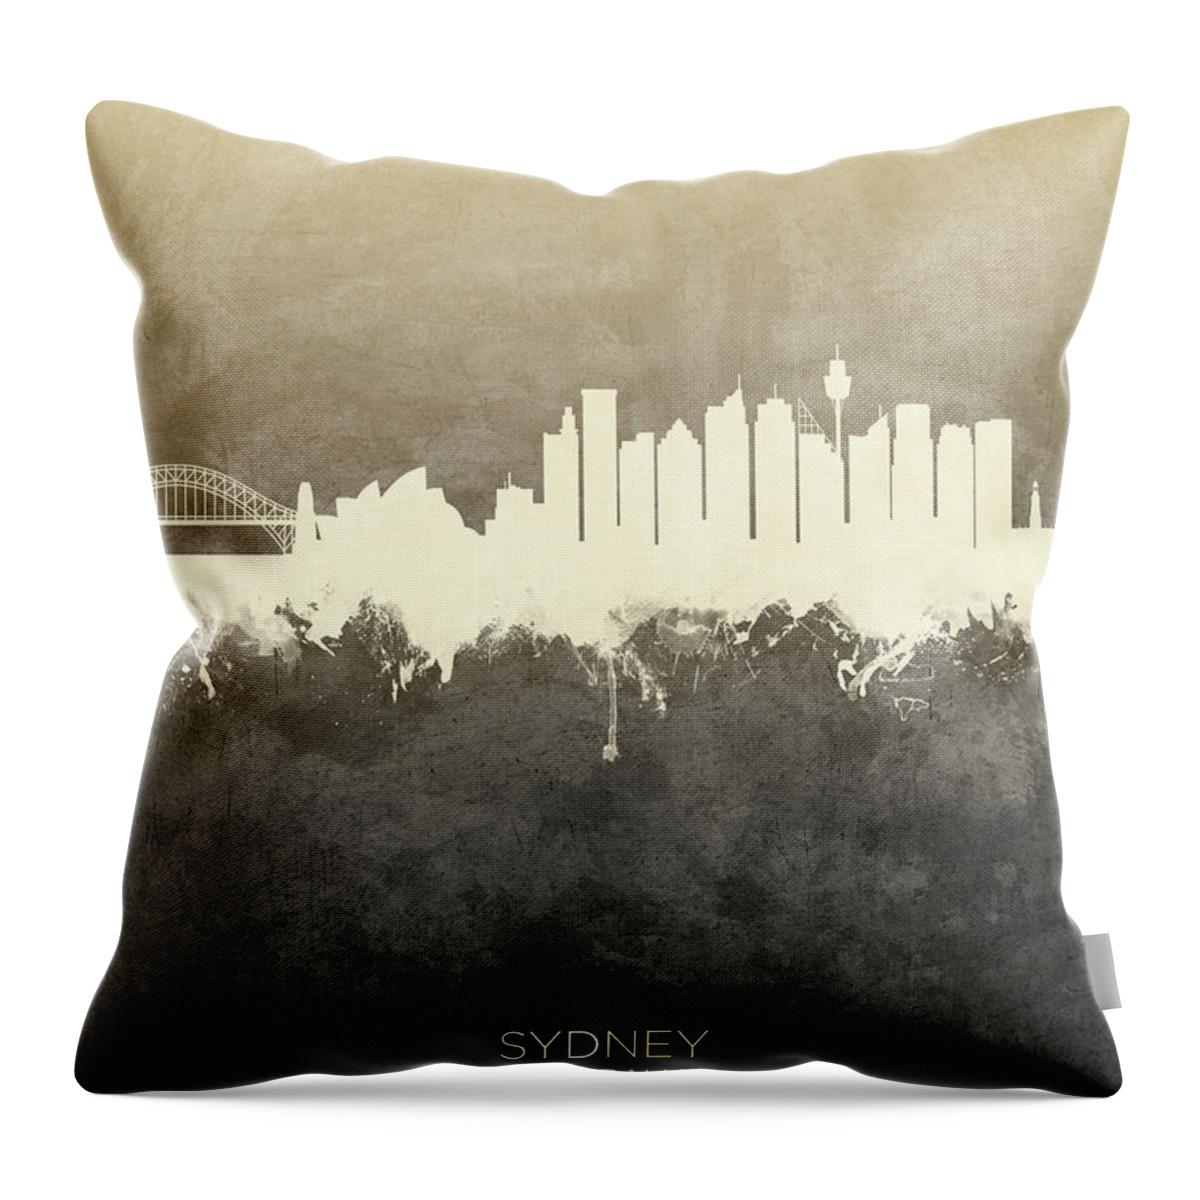 Sydney Throw Pillow featuring the digital art Sydney Australia Skyline #16 by Michael Tompsett